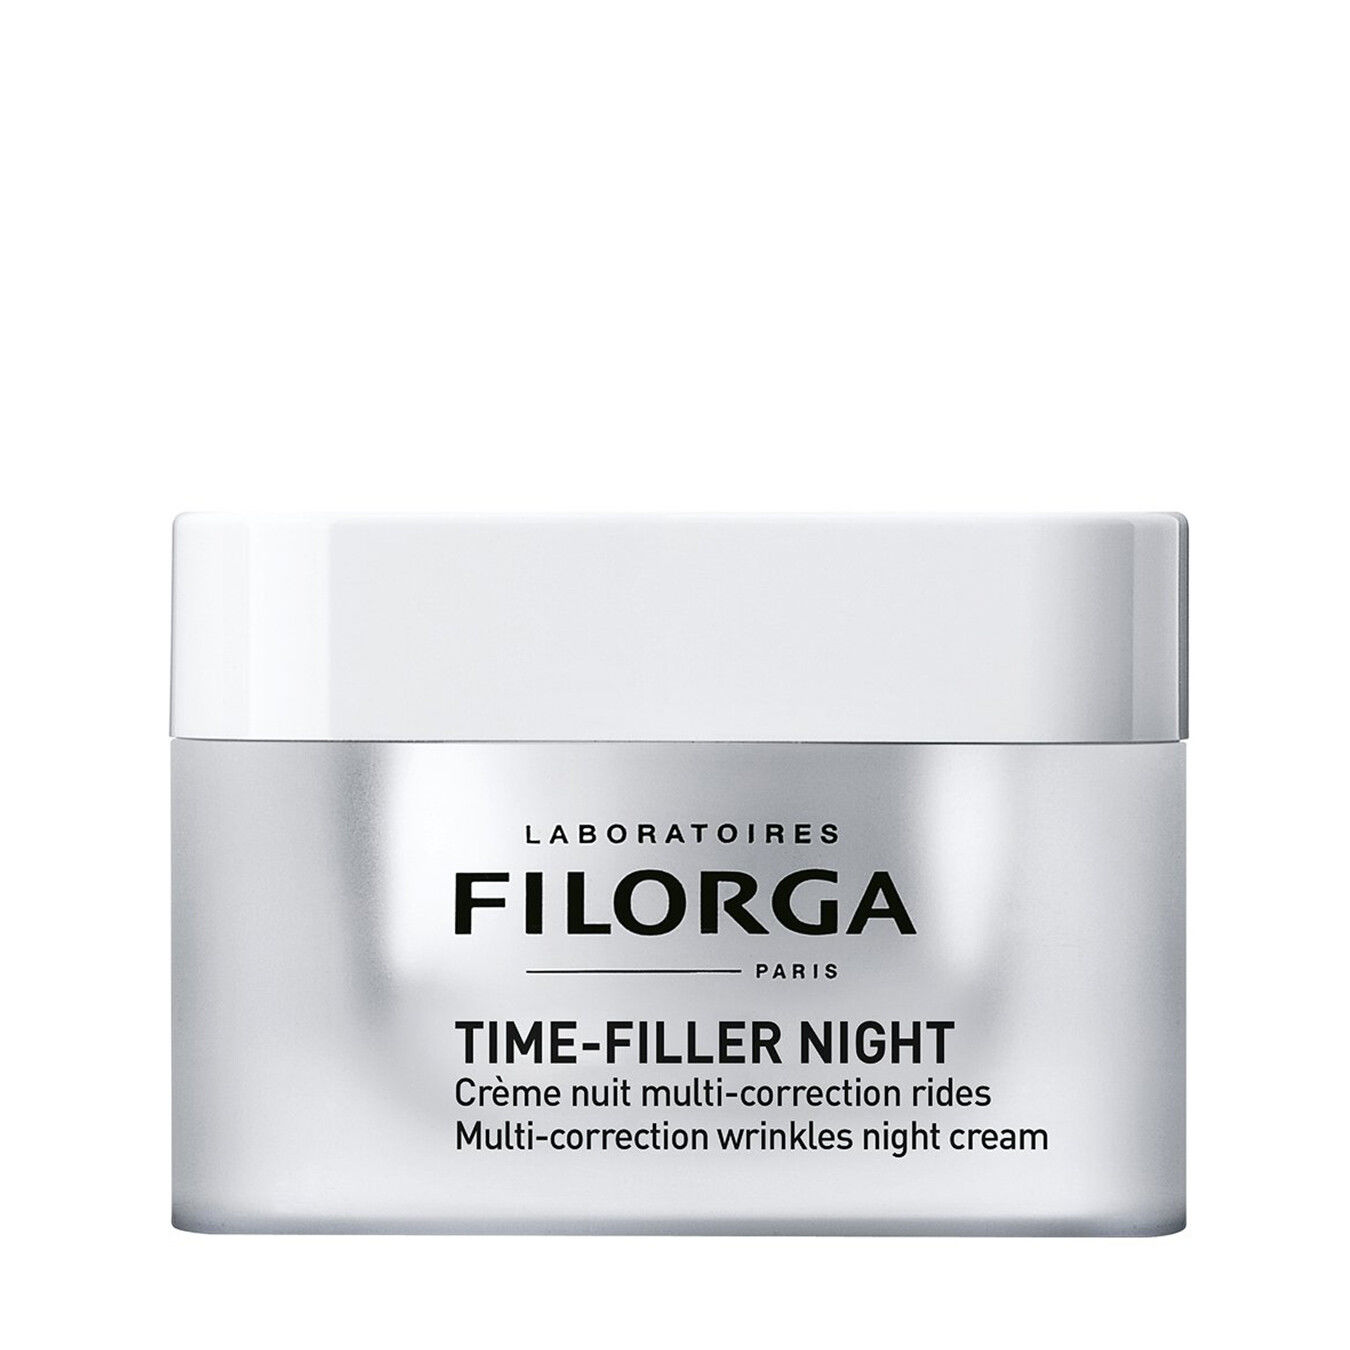 FILORGA Time-Filler Crème nuit multi-correction rides 50ml Damen von Filorga